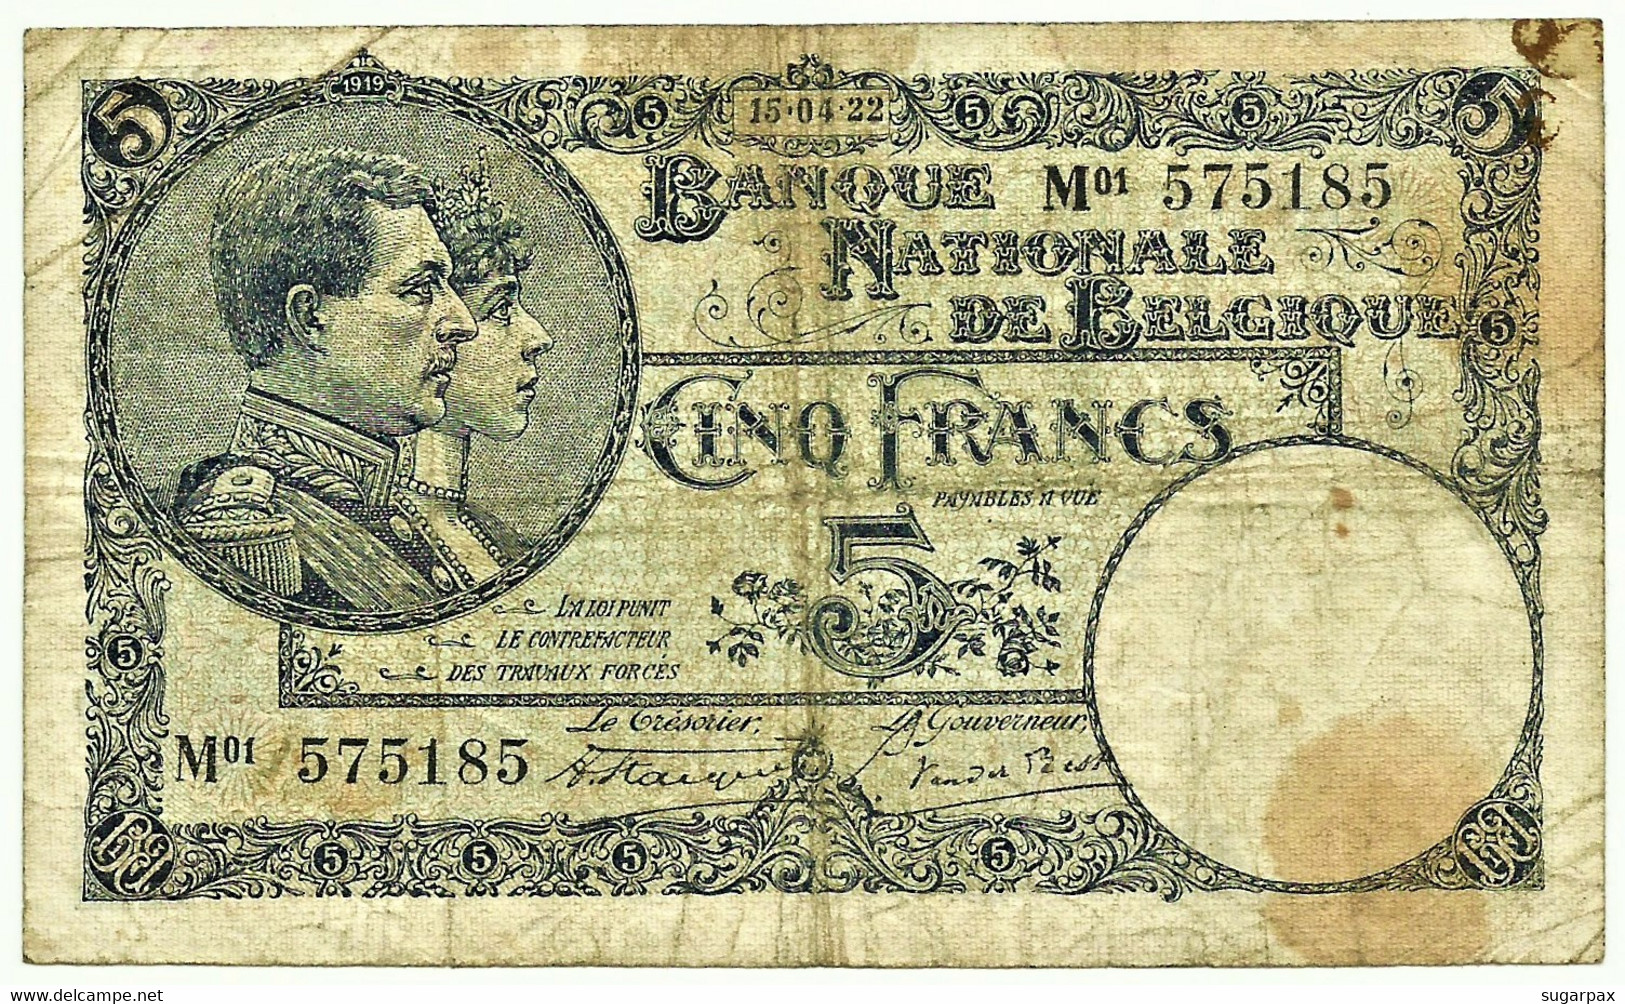 Belgium - 5 Francs - 15.04.1922 - Pick 93 - Serie M 01 - Belgie Belgique - 5 Francs